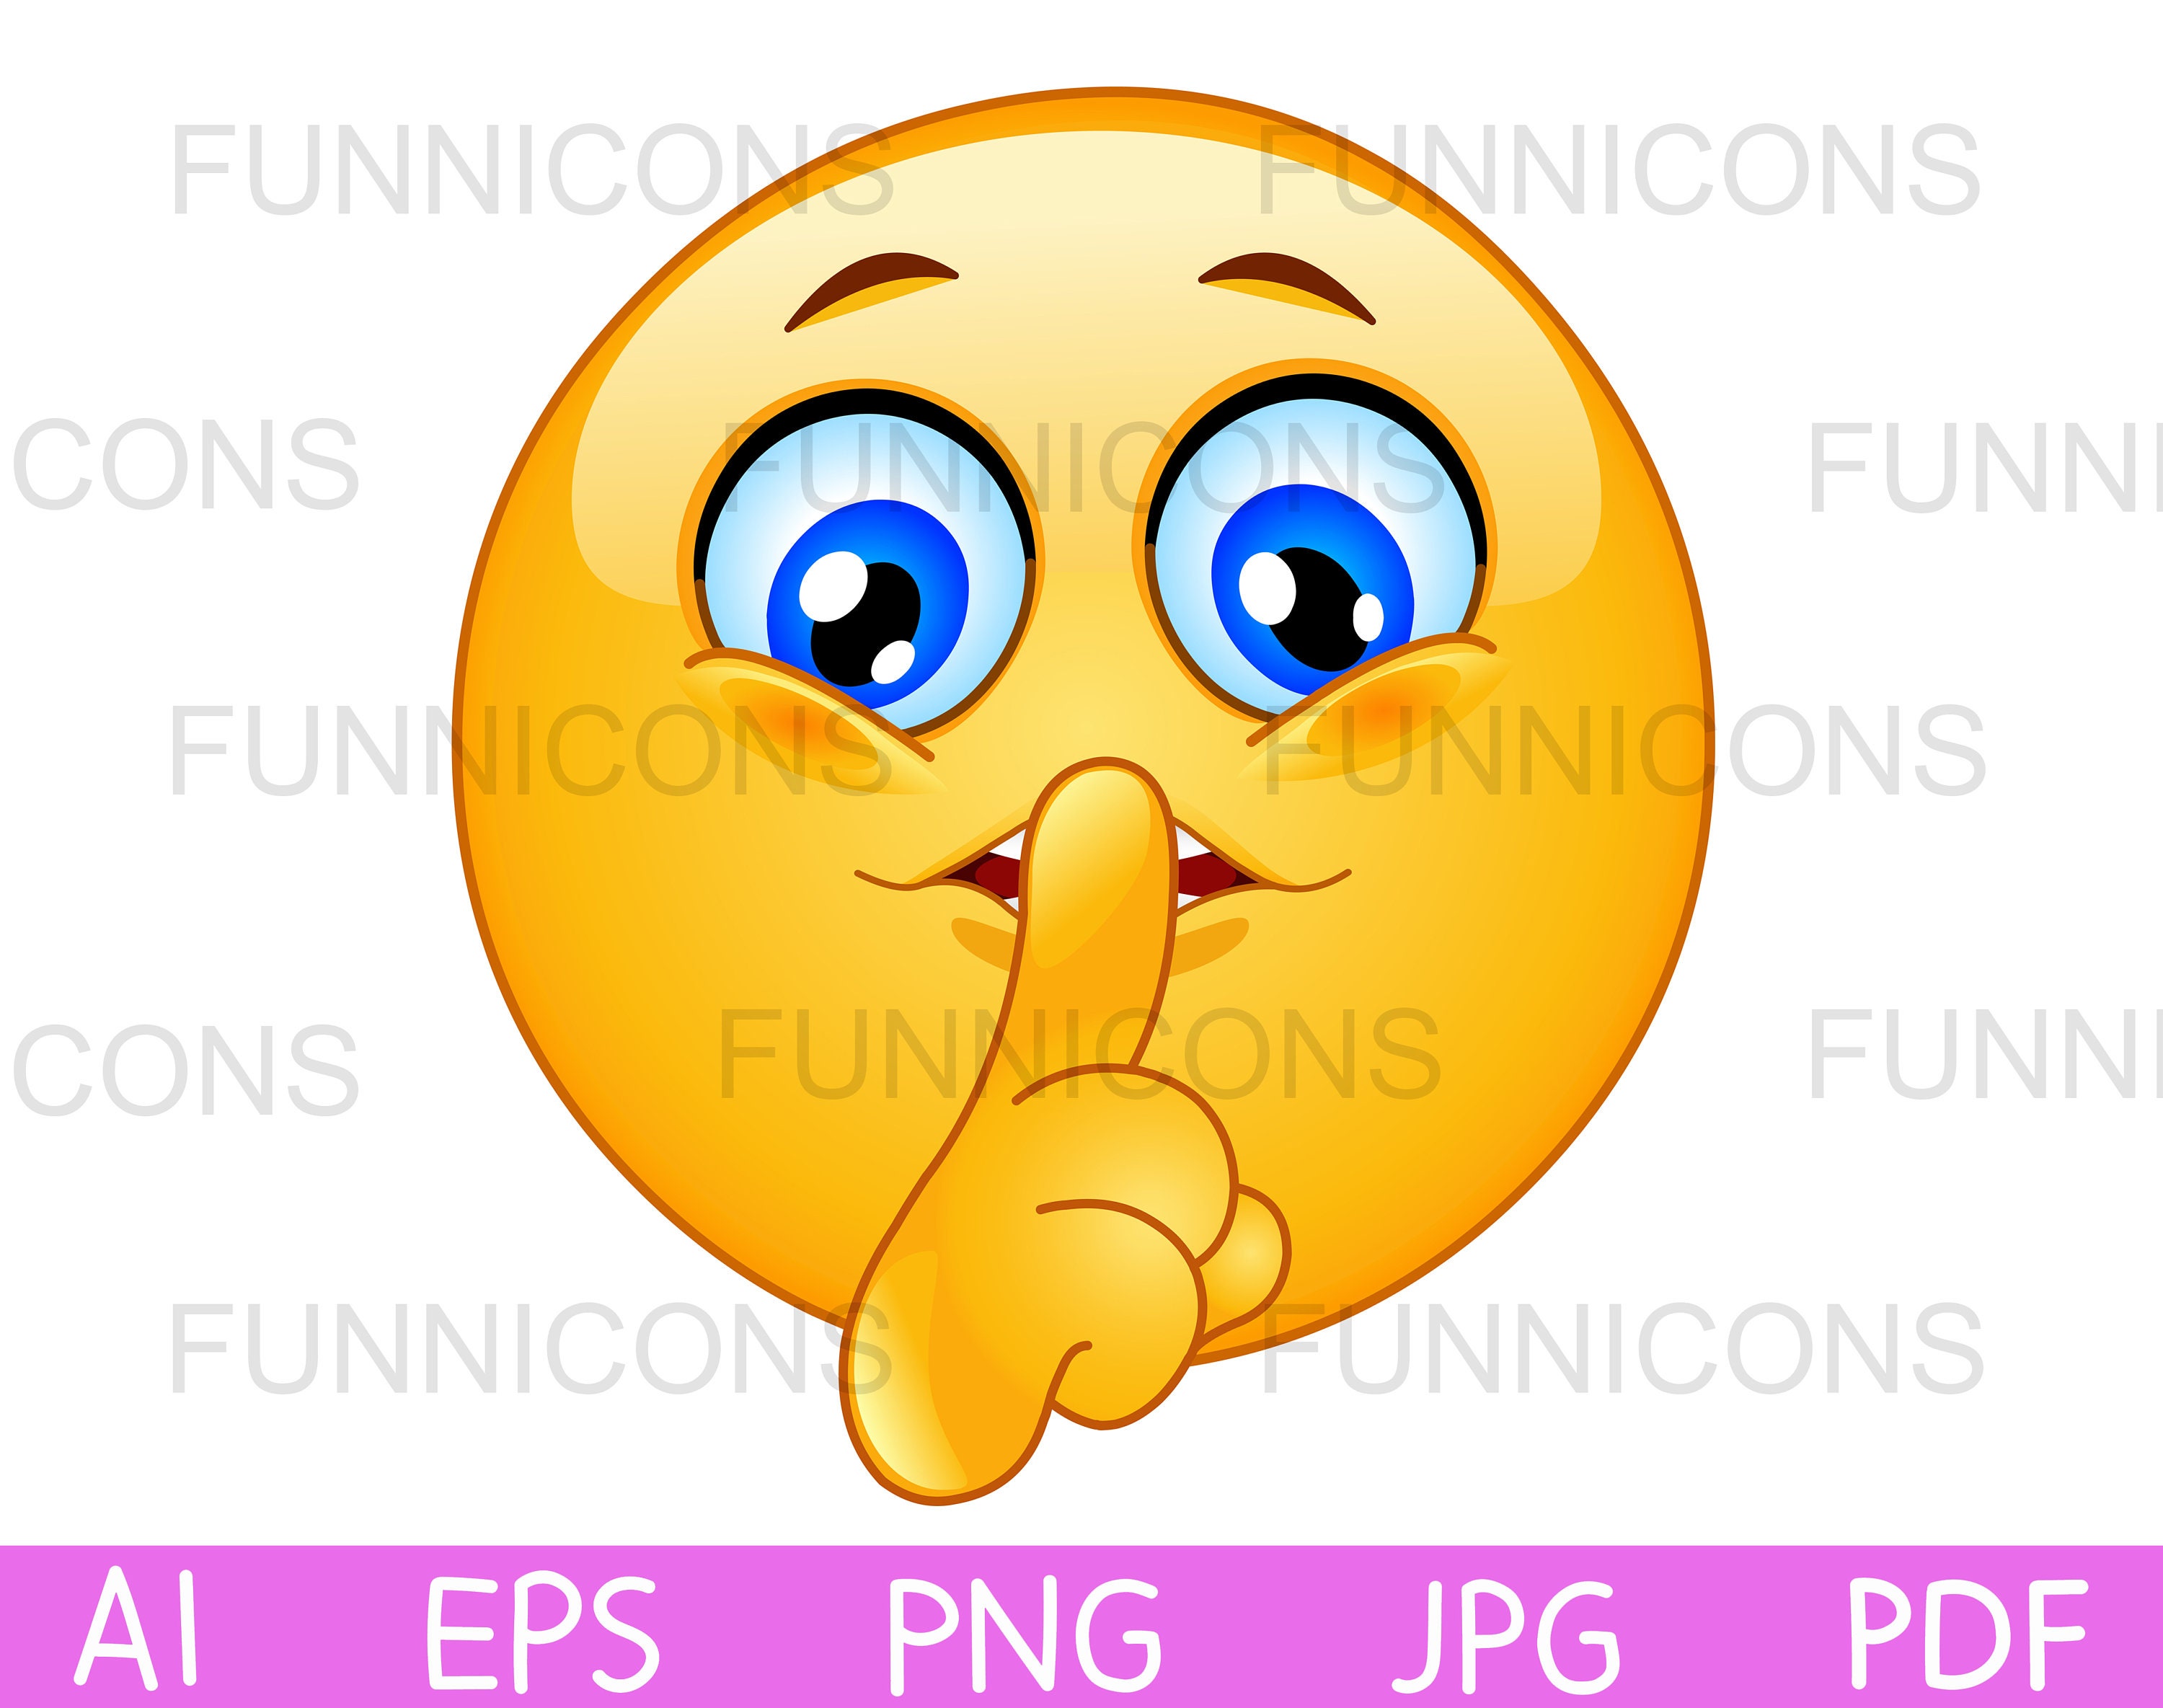 Digital Stickers - Mood Emoji Emoticon - Goodnotes | PDF | PNG